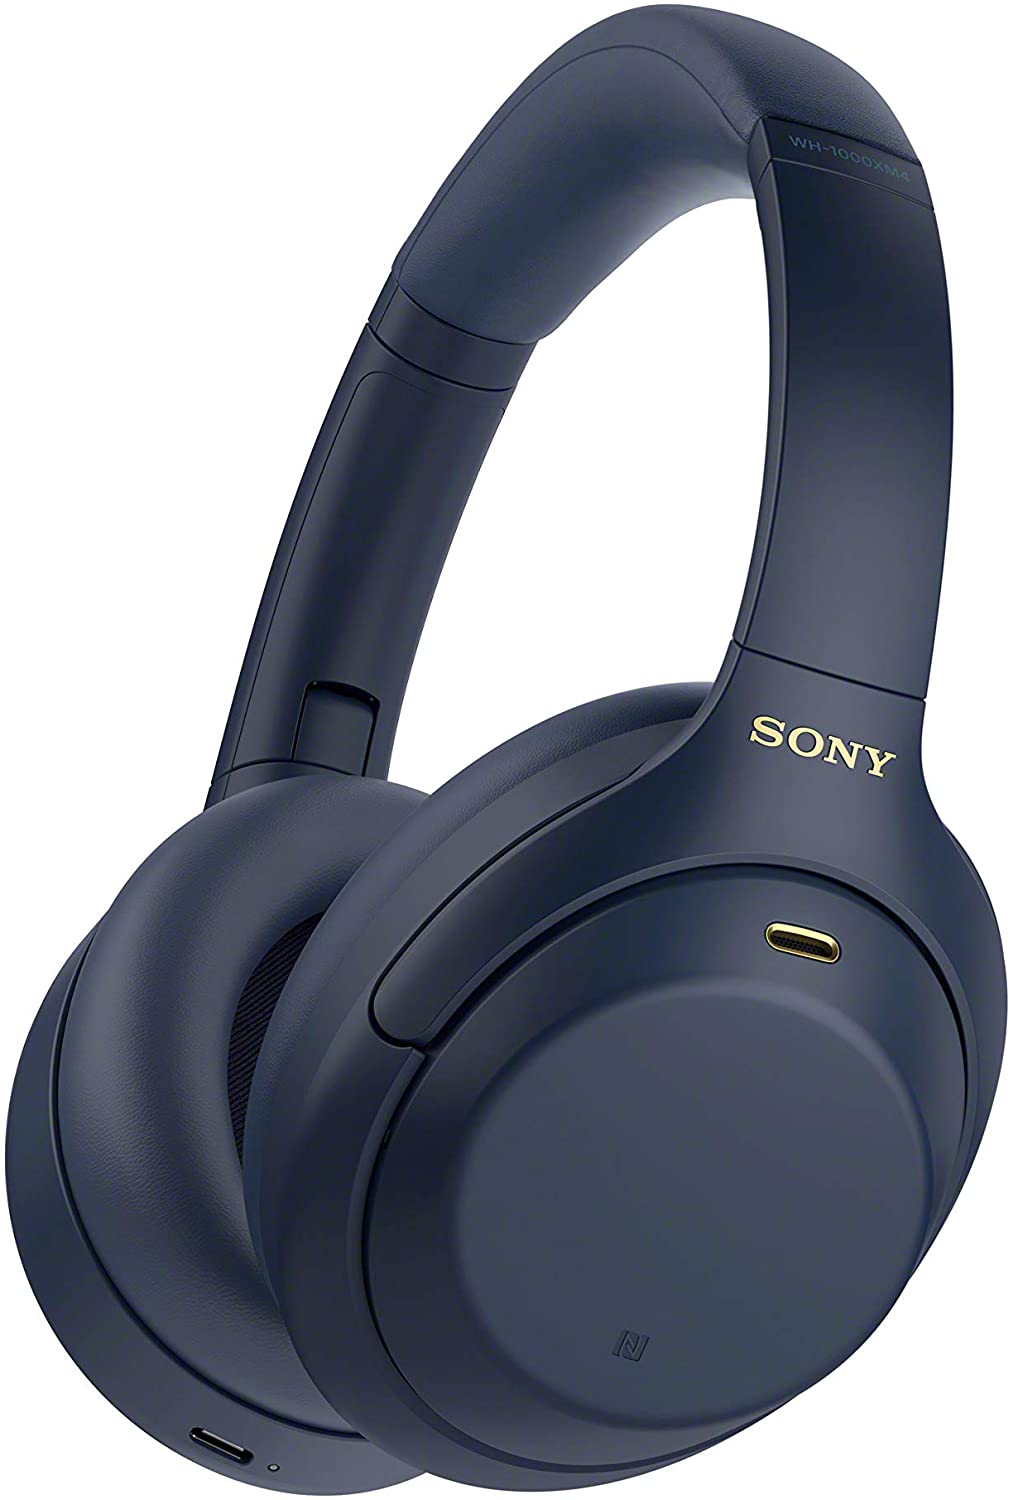 Sony Noise-Cancelling Wireless On-Ear Headphones - Blue (Certified Refurbished)